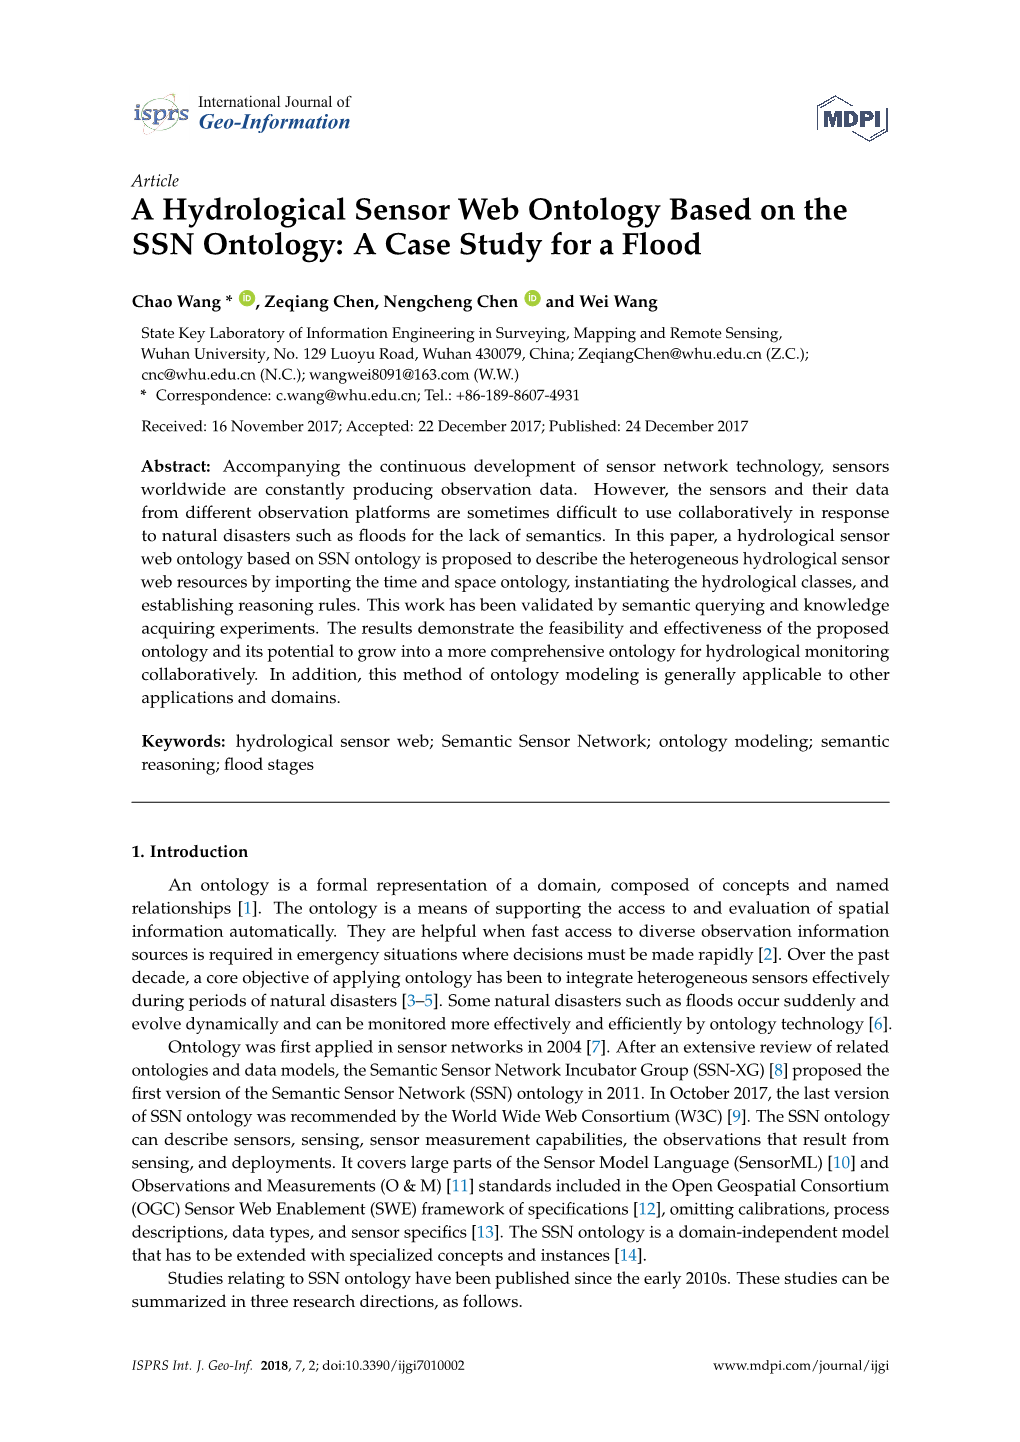 A Hydrological Sensor Web Ontology Based on the SSN Ontology: a Case Study for a Flood